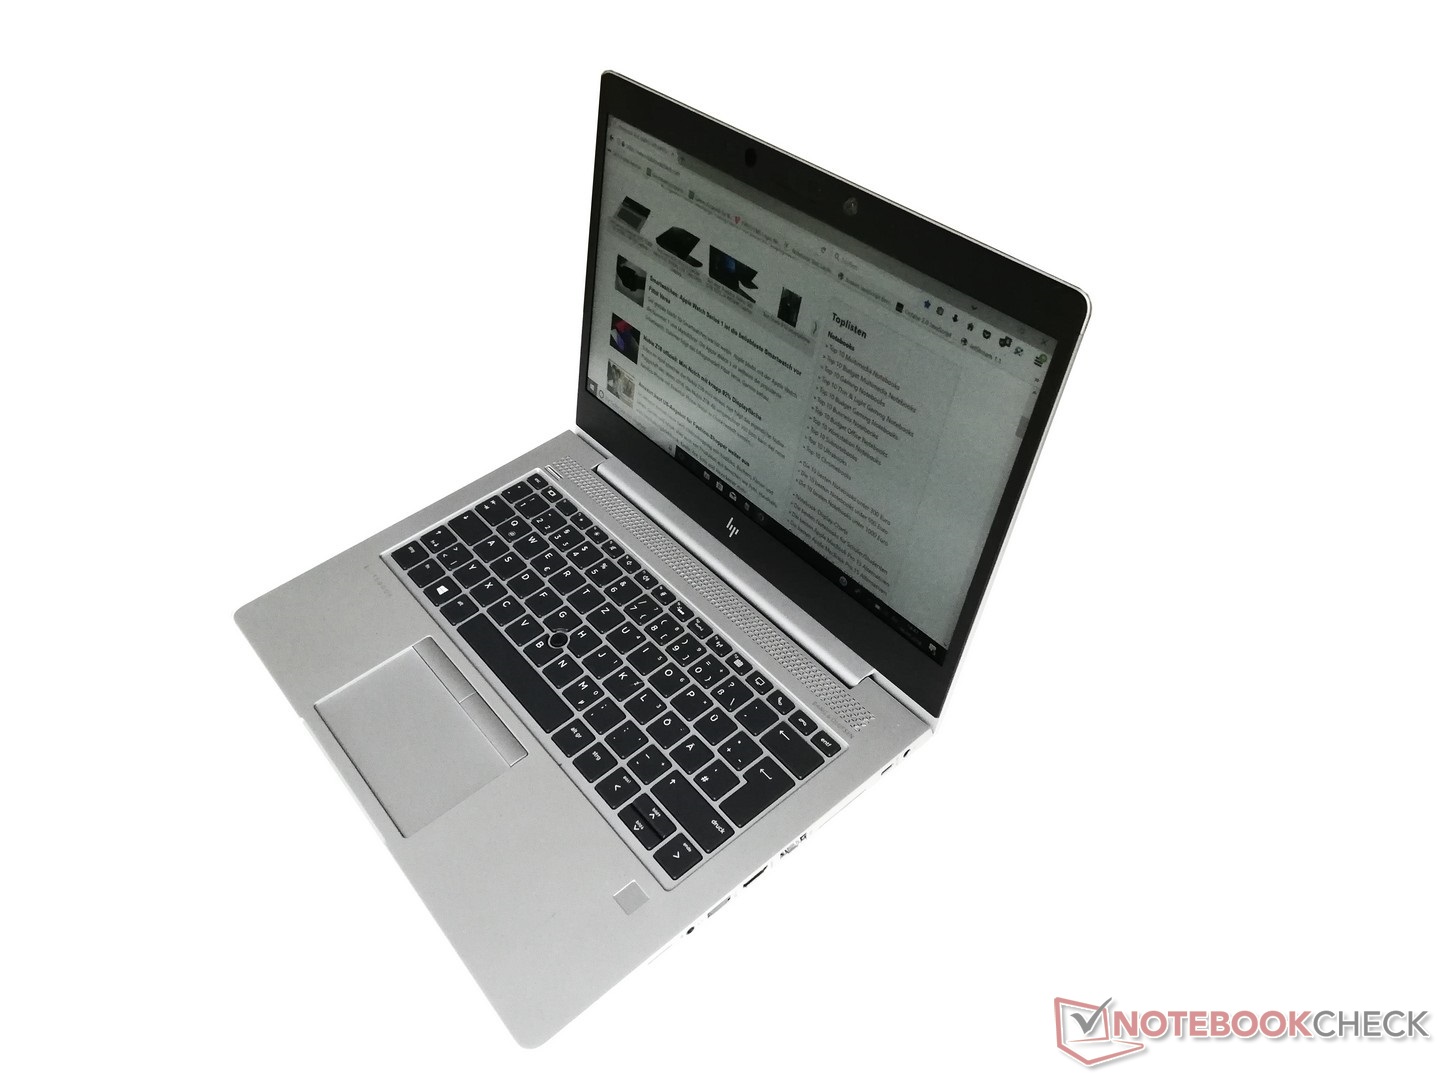 EliteBook 850 G5 Notebook PC